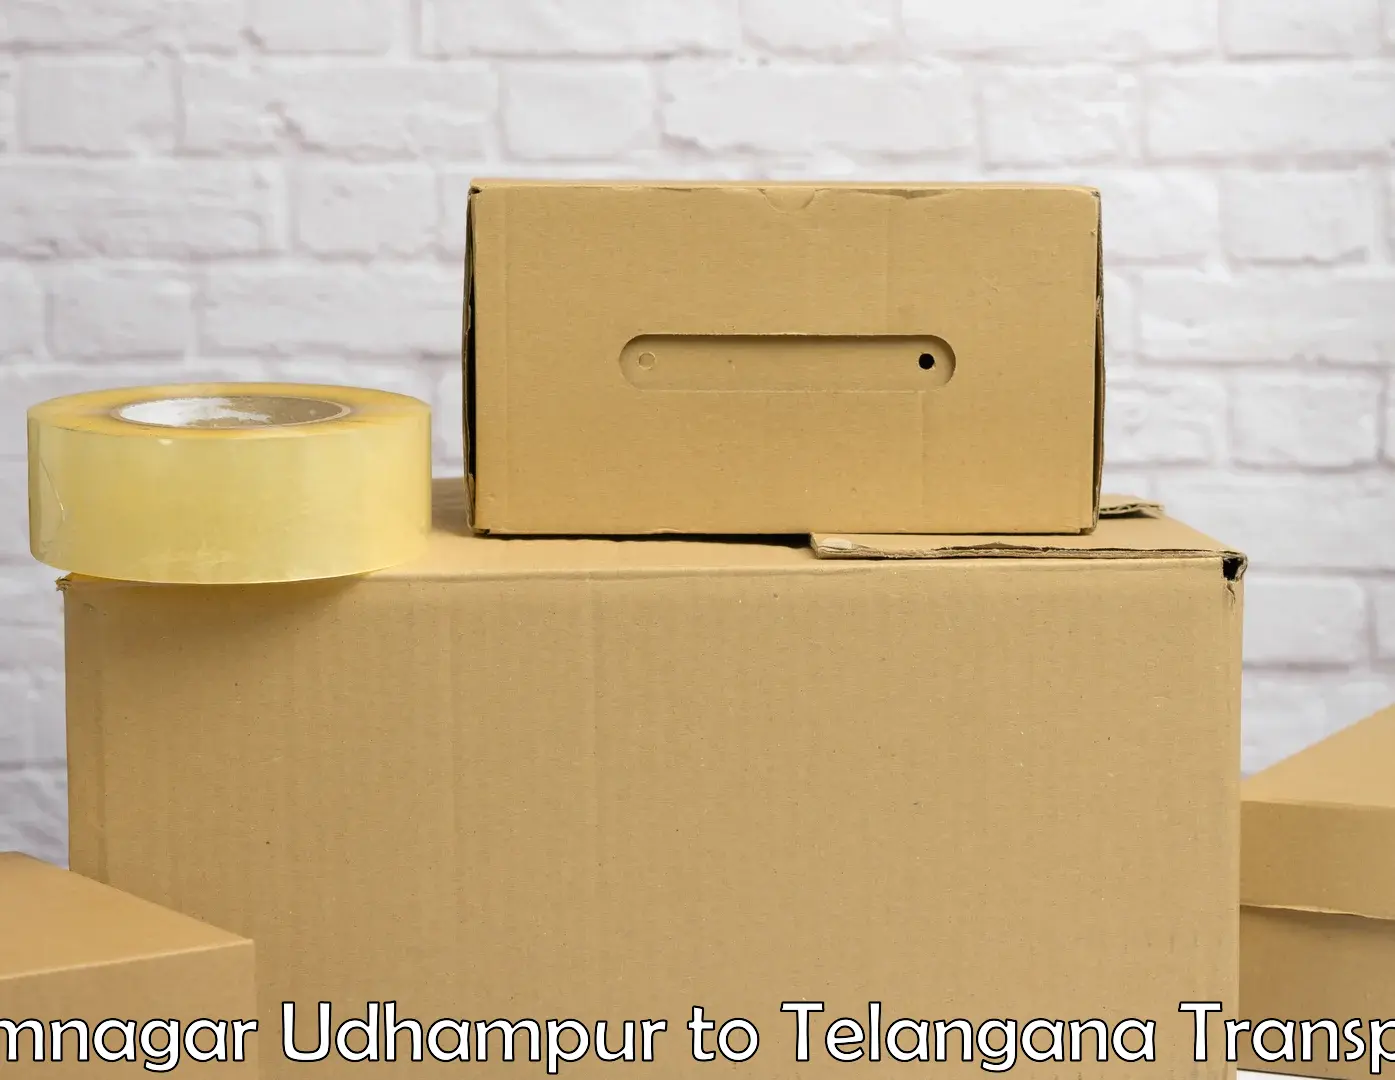 Shipping partner Ramnagar Udhampur to Kadthal